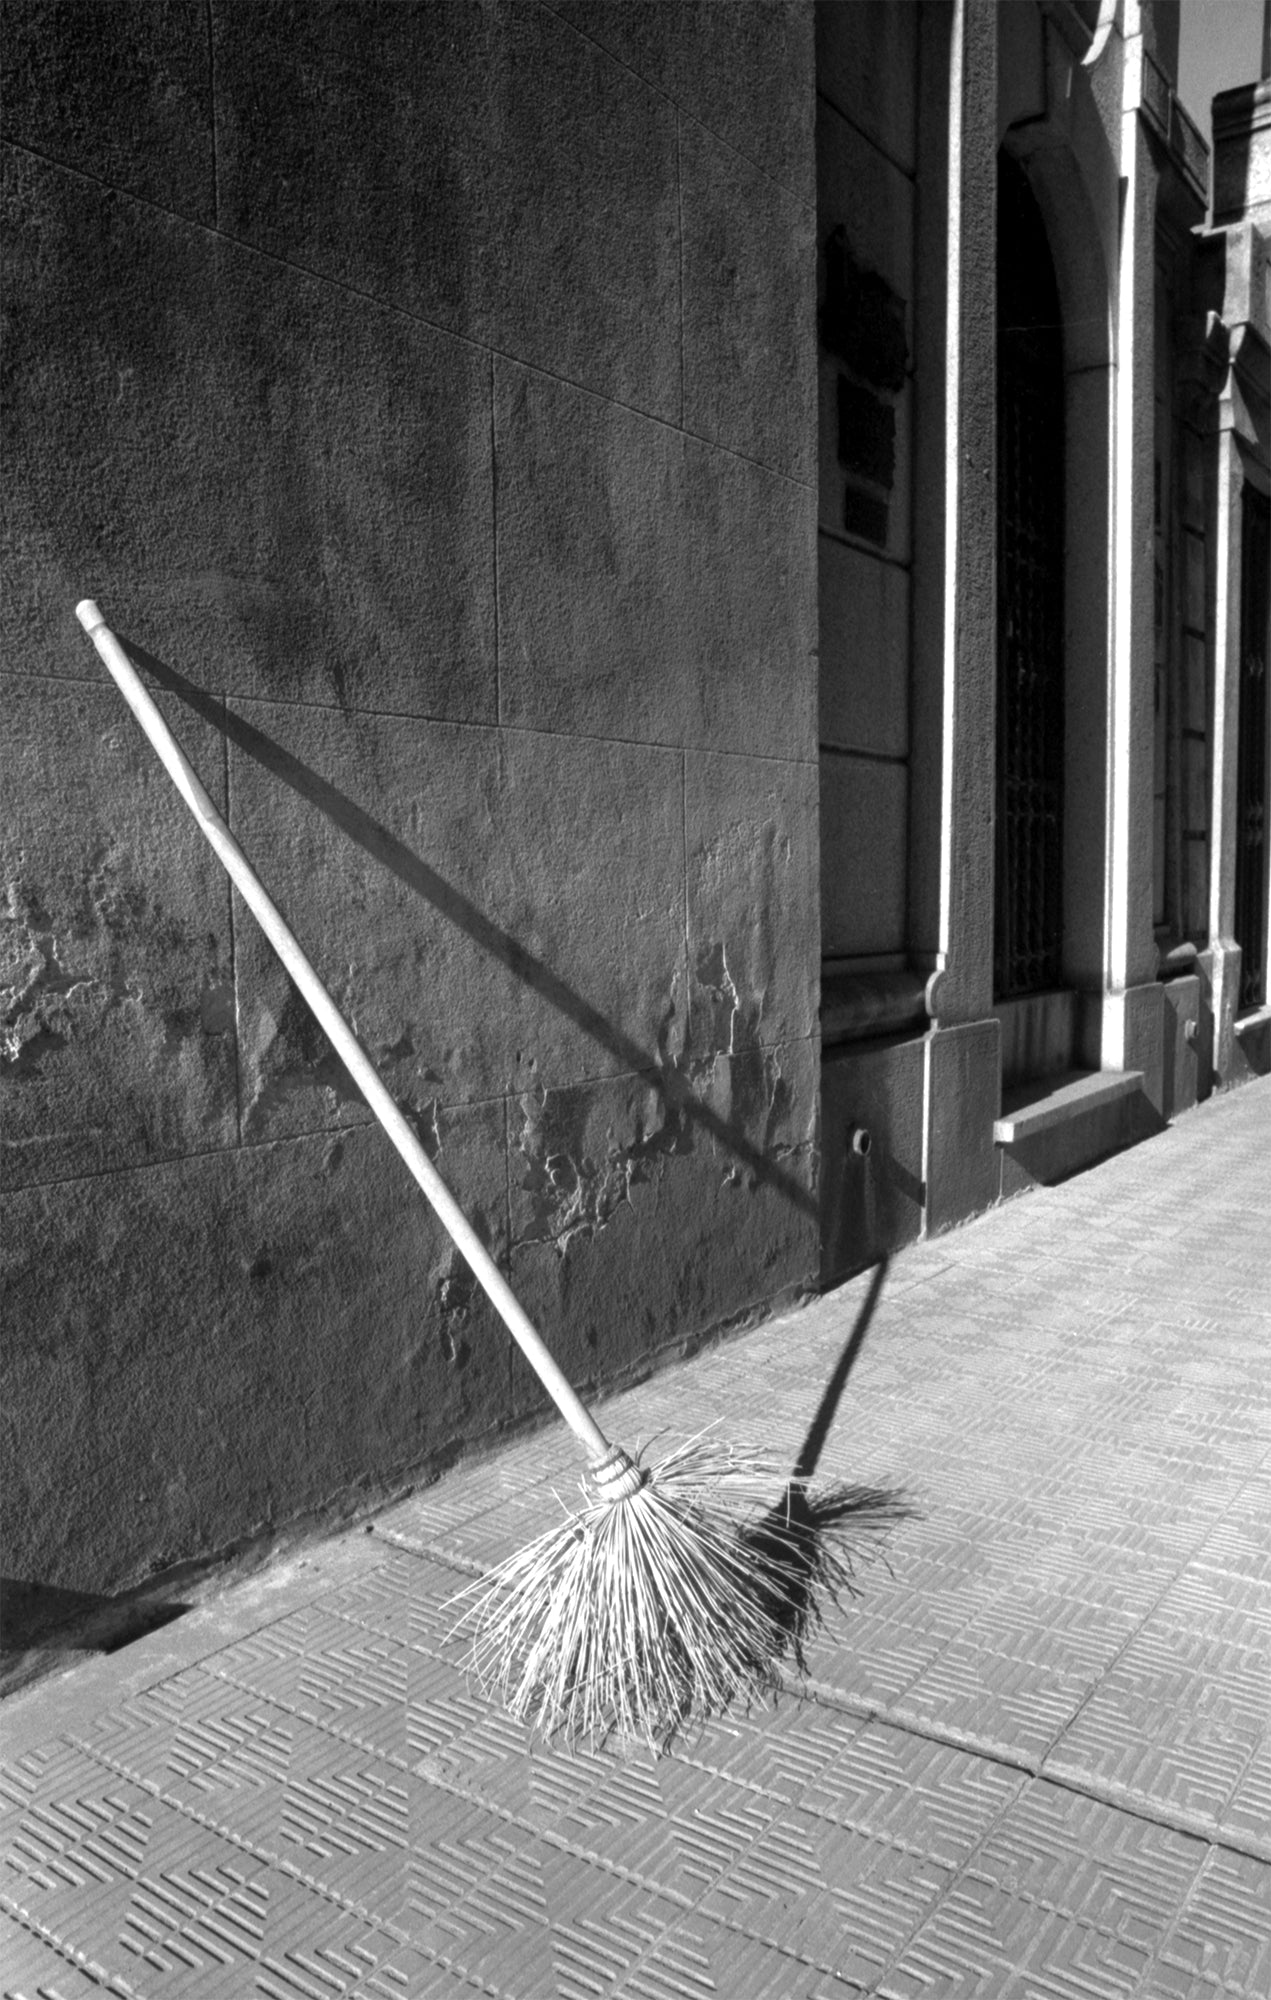 Cemetery Broom II - Recoleta Buenos Aires - Photography